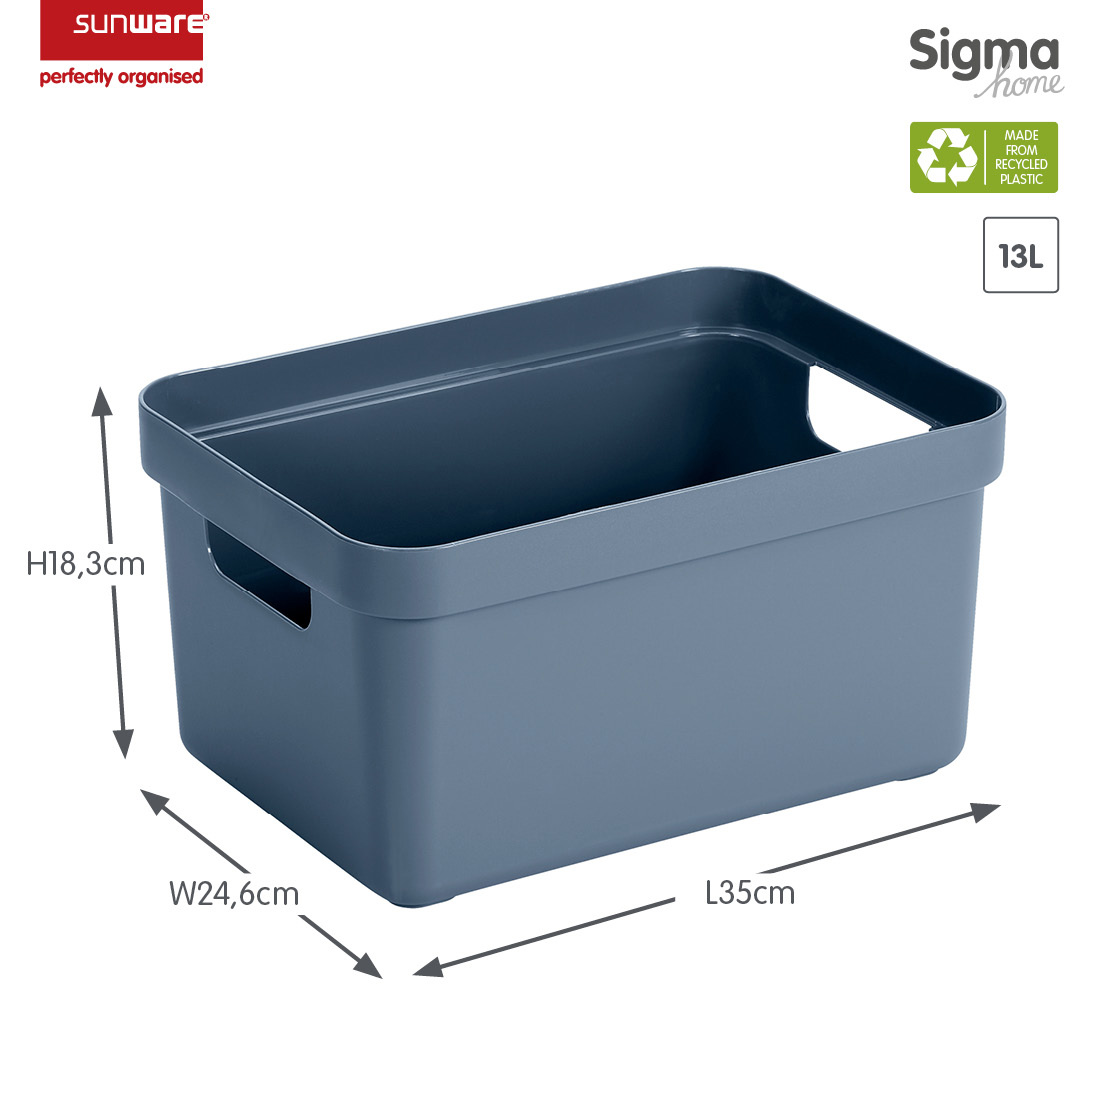 Sigma home Aufbewahrungsbox 13L dunkel blau